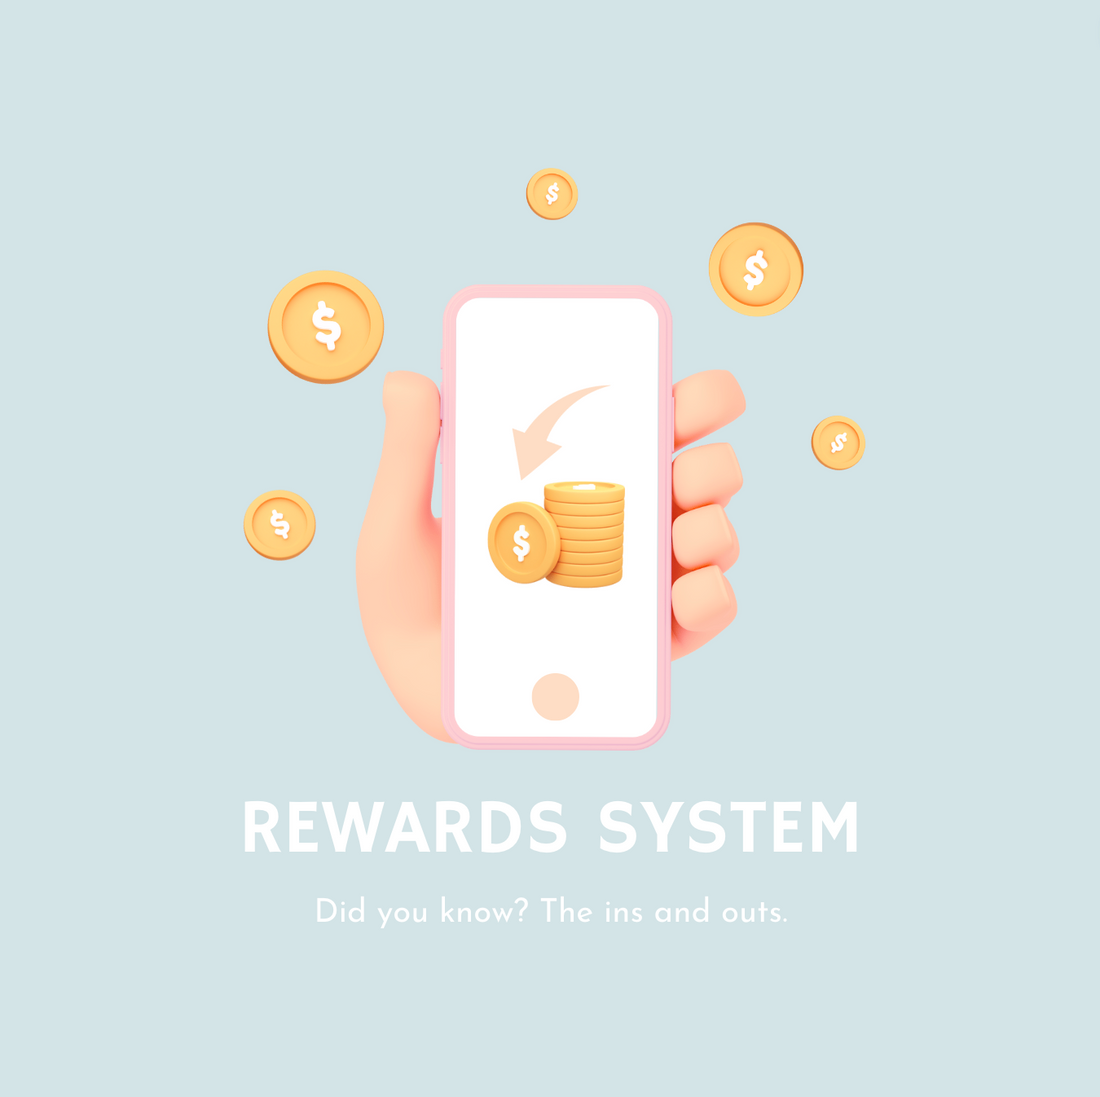 Did you know: Rewards System